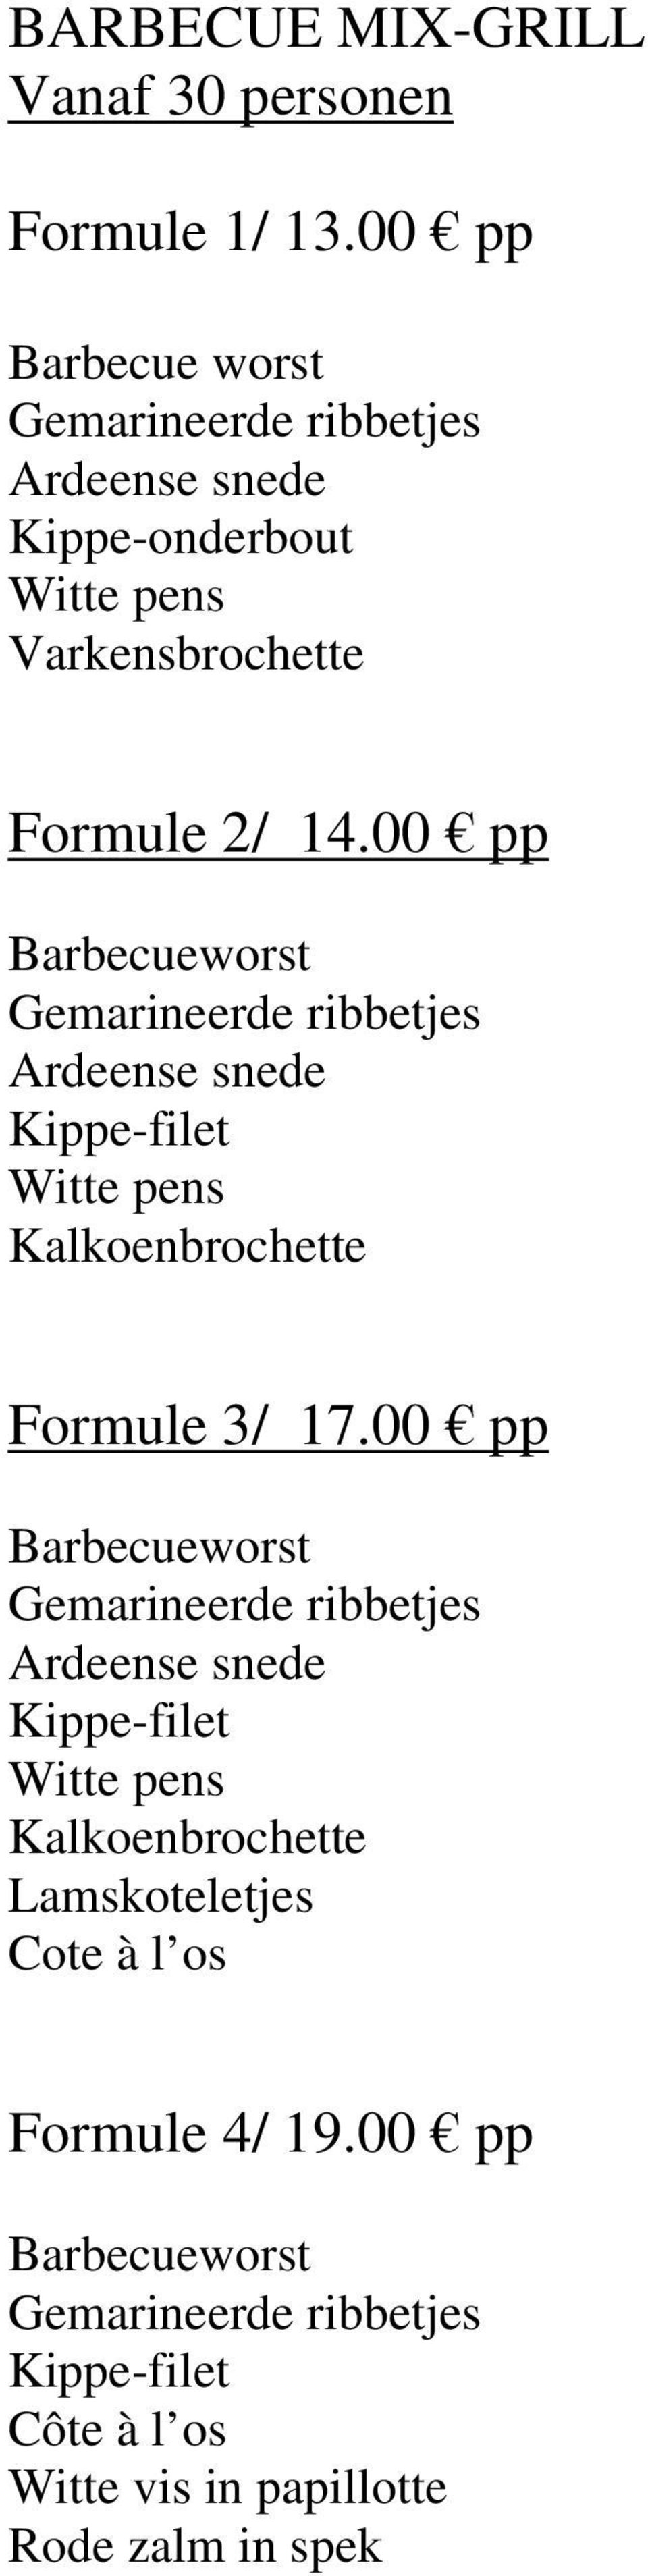 00 pp Barbecueworst Gemarineerde ribbetjes Ardeense snede Kippe-filet Witte pens Kalkoenbrochette Formule 3/ 17.